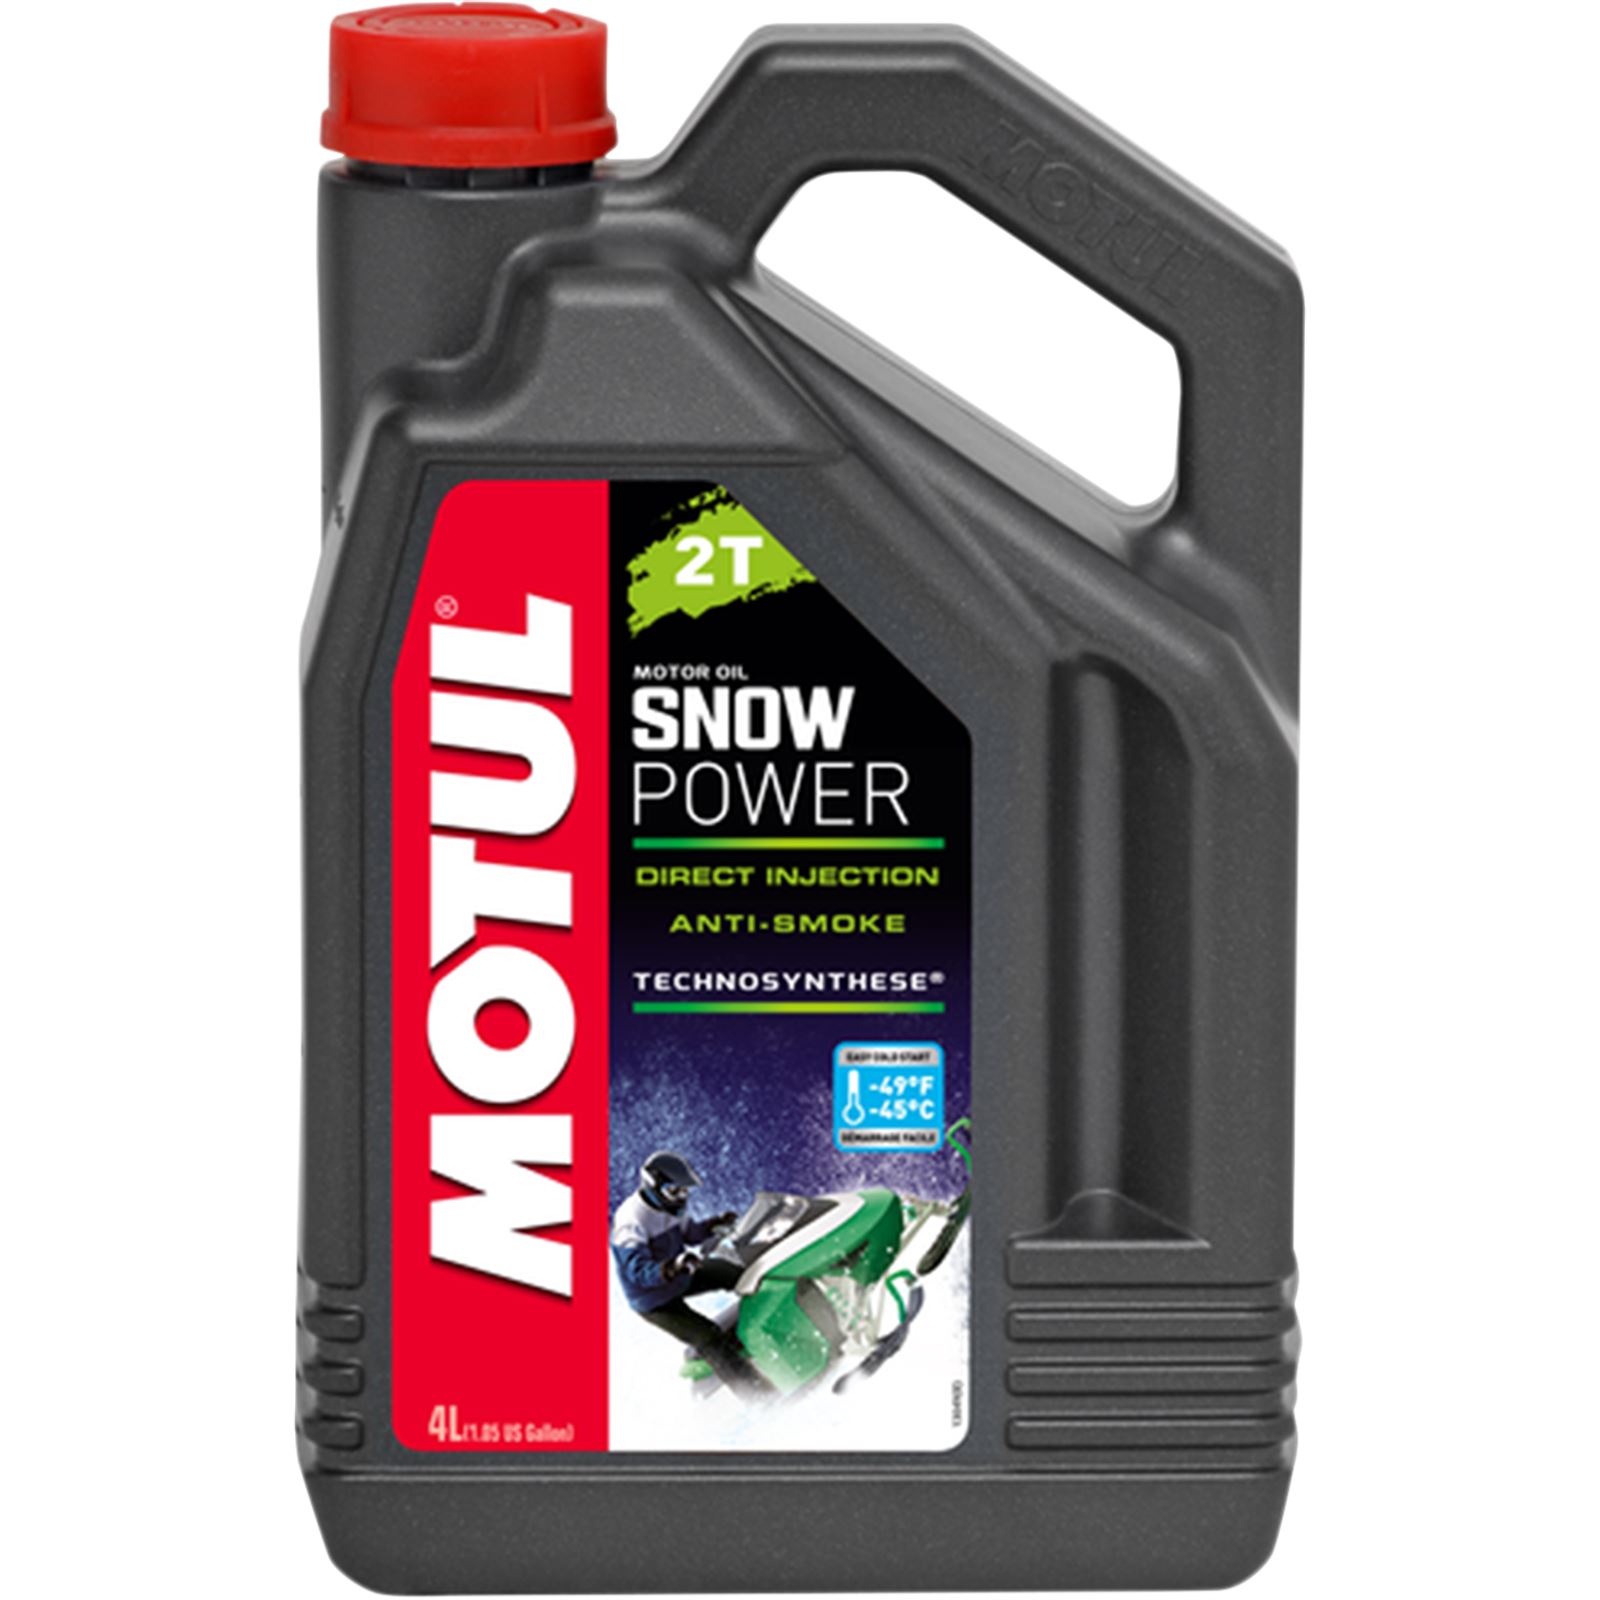 Motul Snowpower 2T Oil - 4 Liter